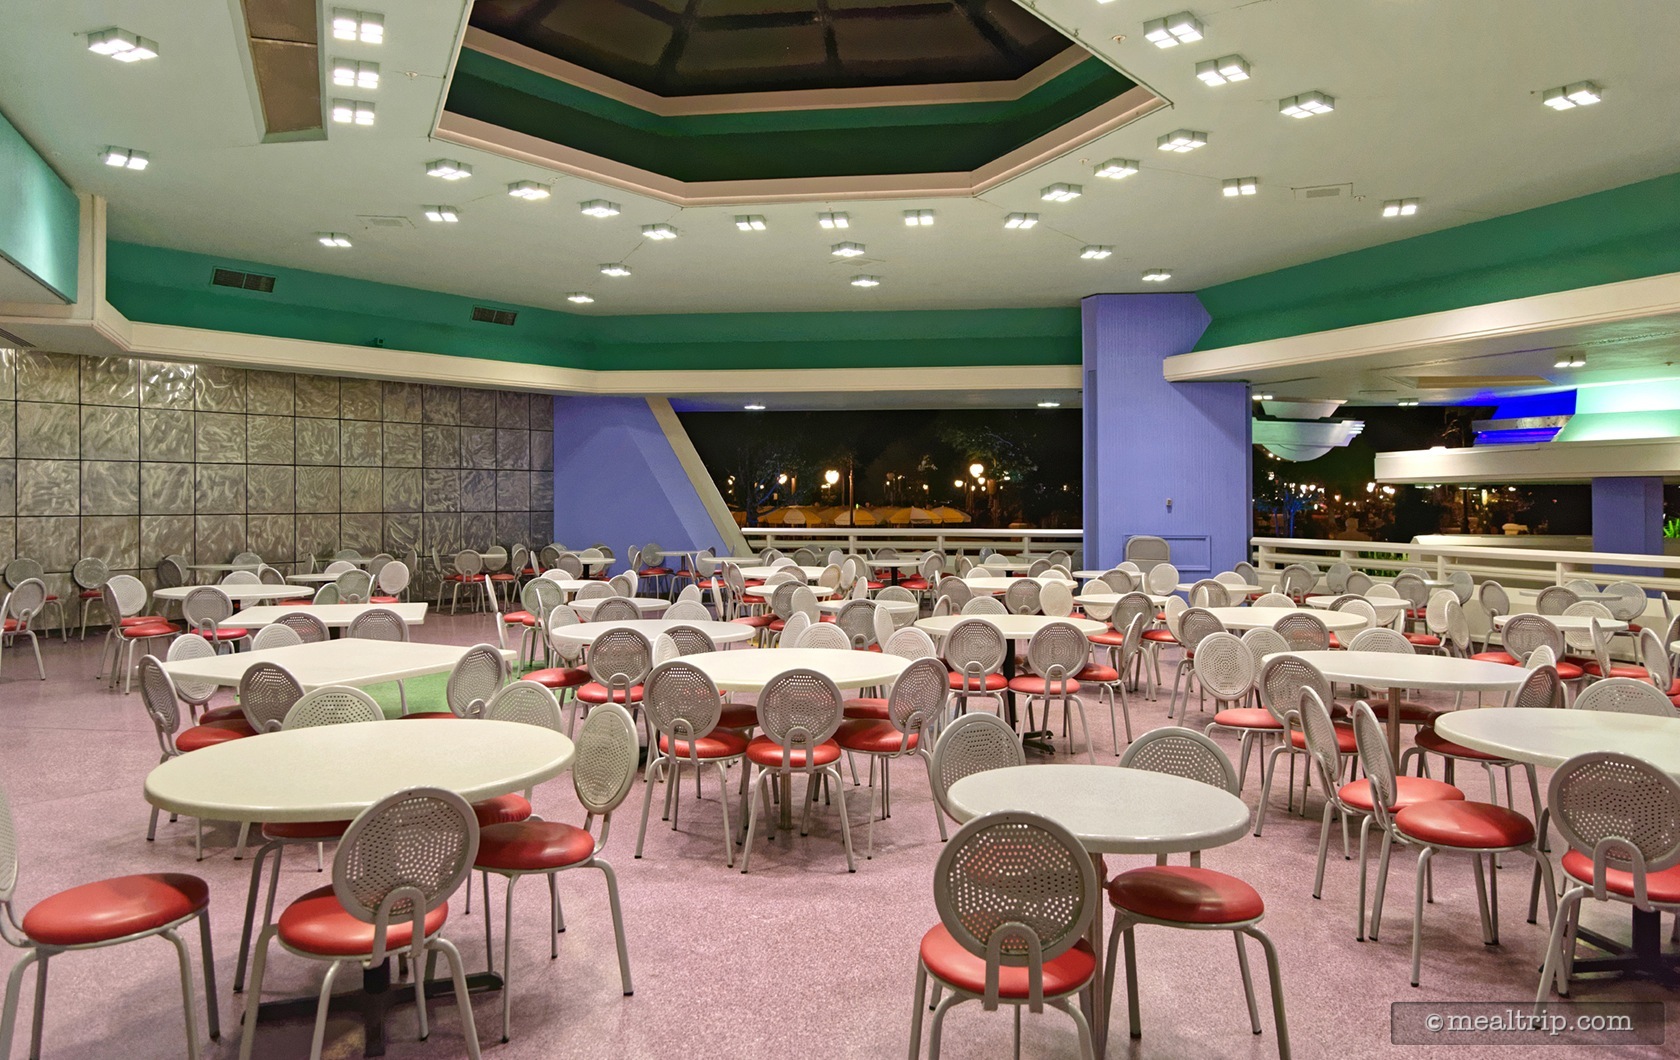 Photo Gallery for Tomorrowland Terrace Restaurant at Magic Kingdom